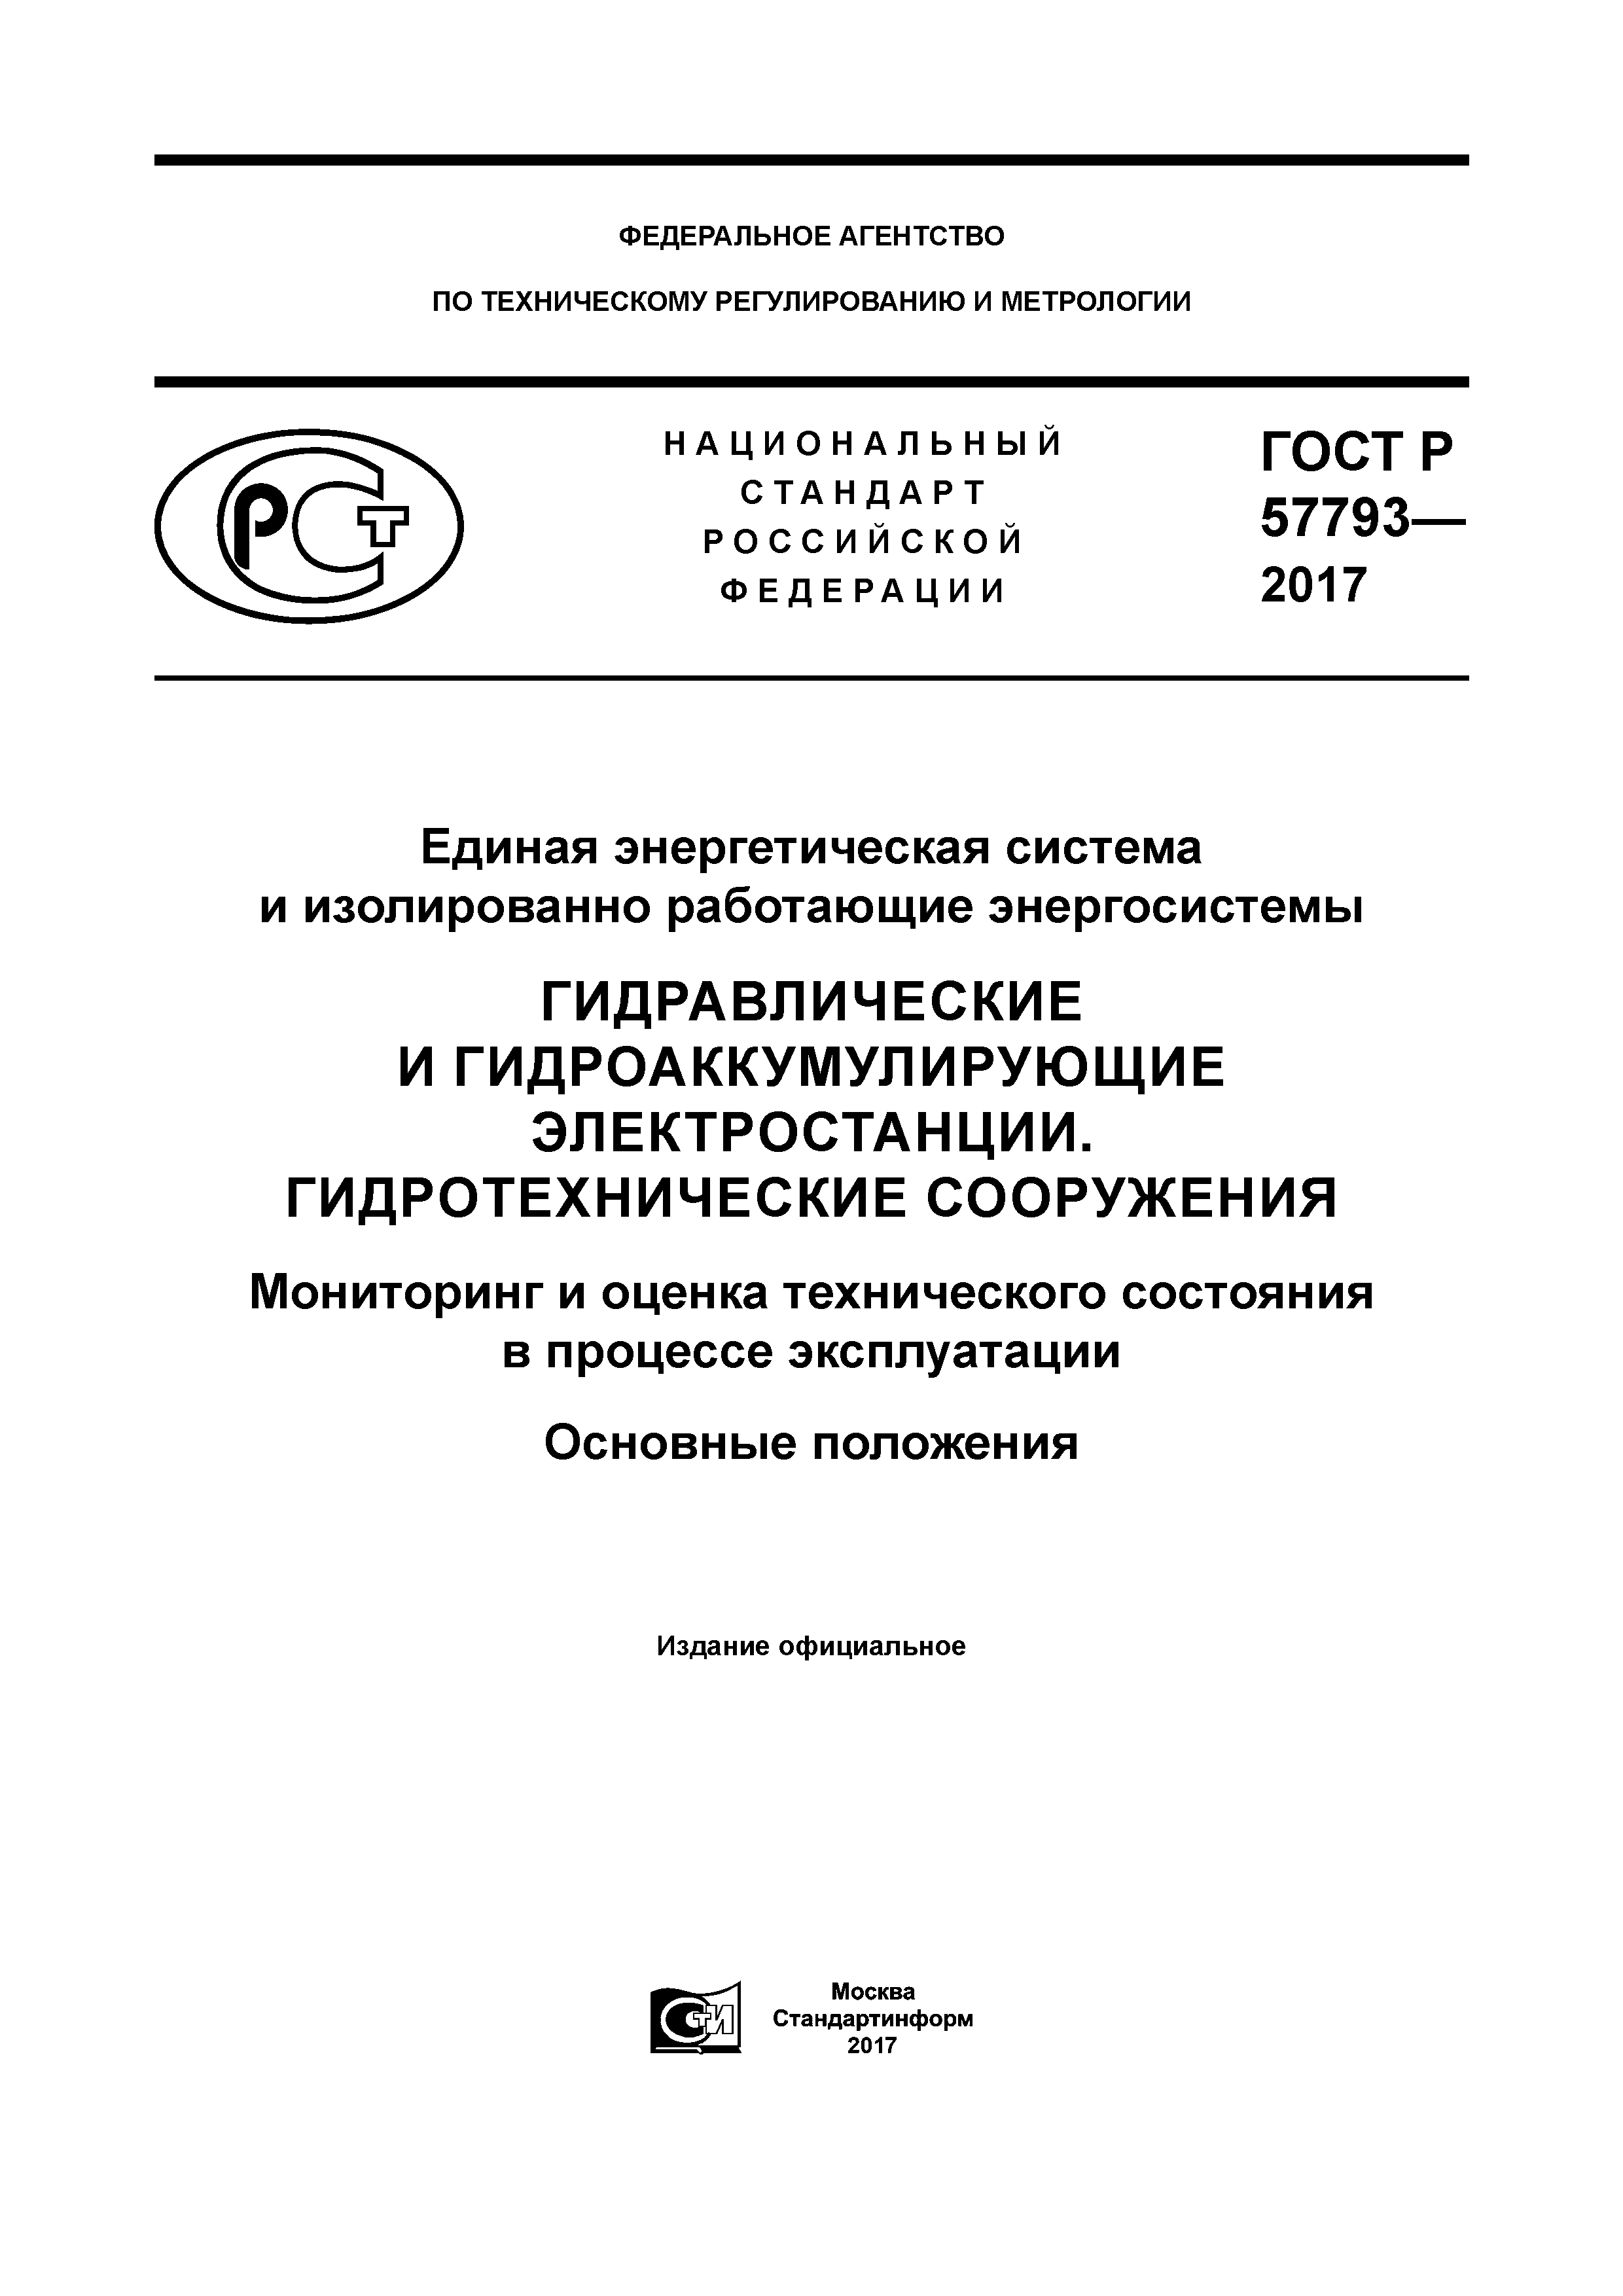 ГОСТ Р 57793-2017